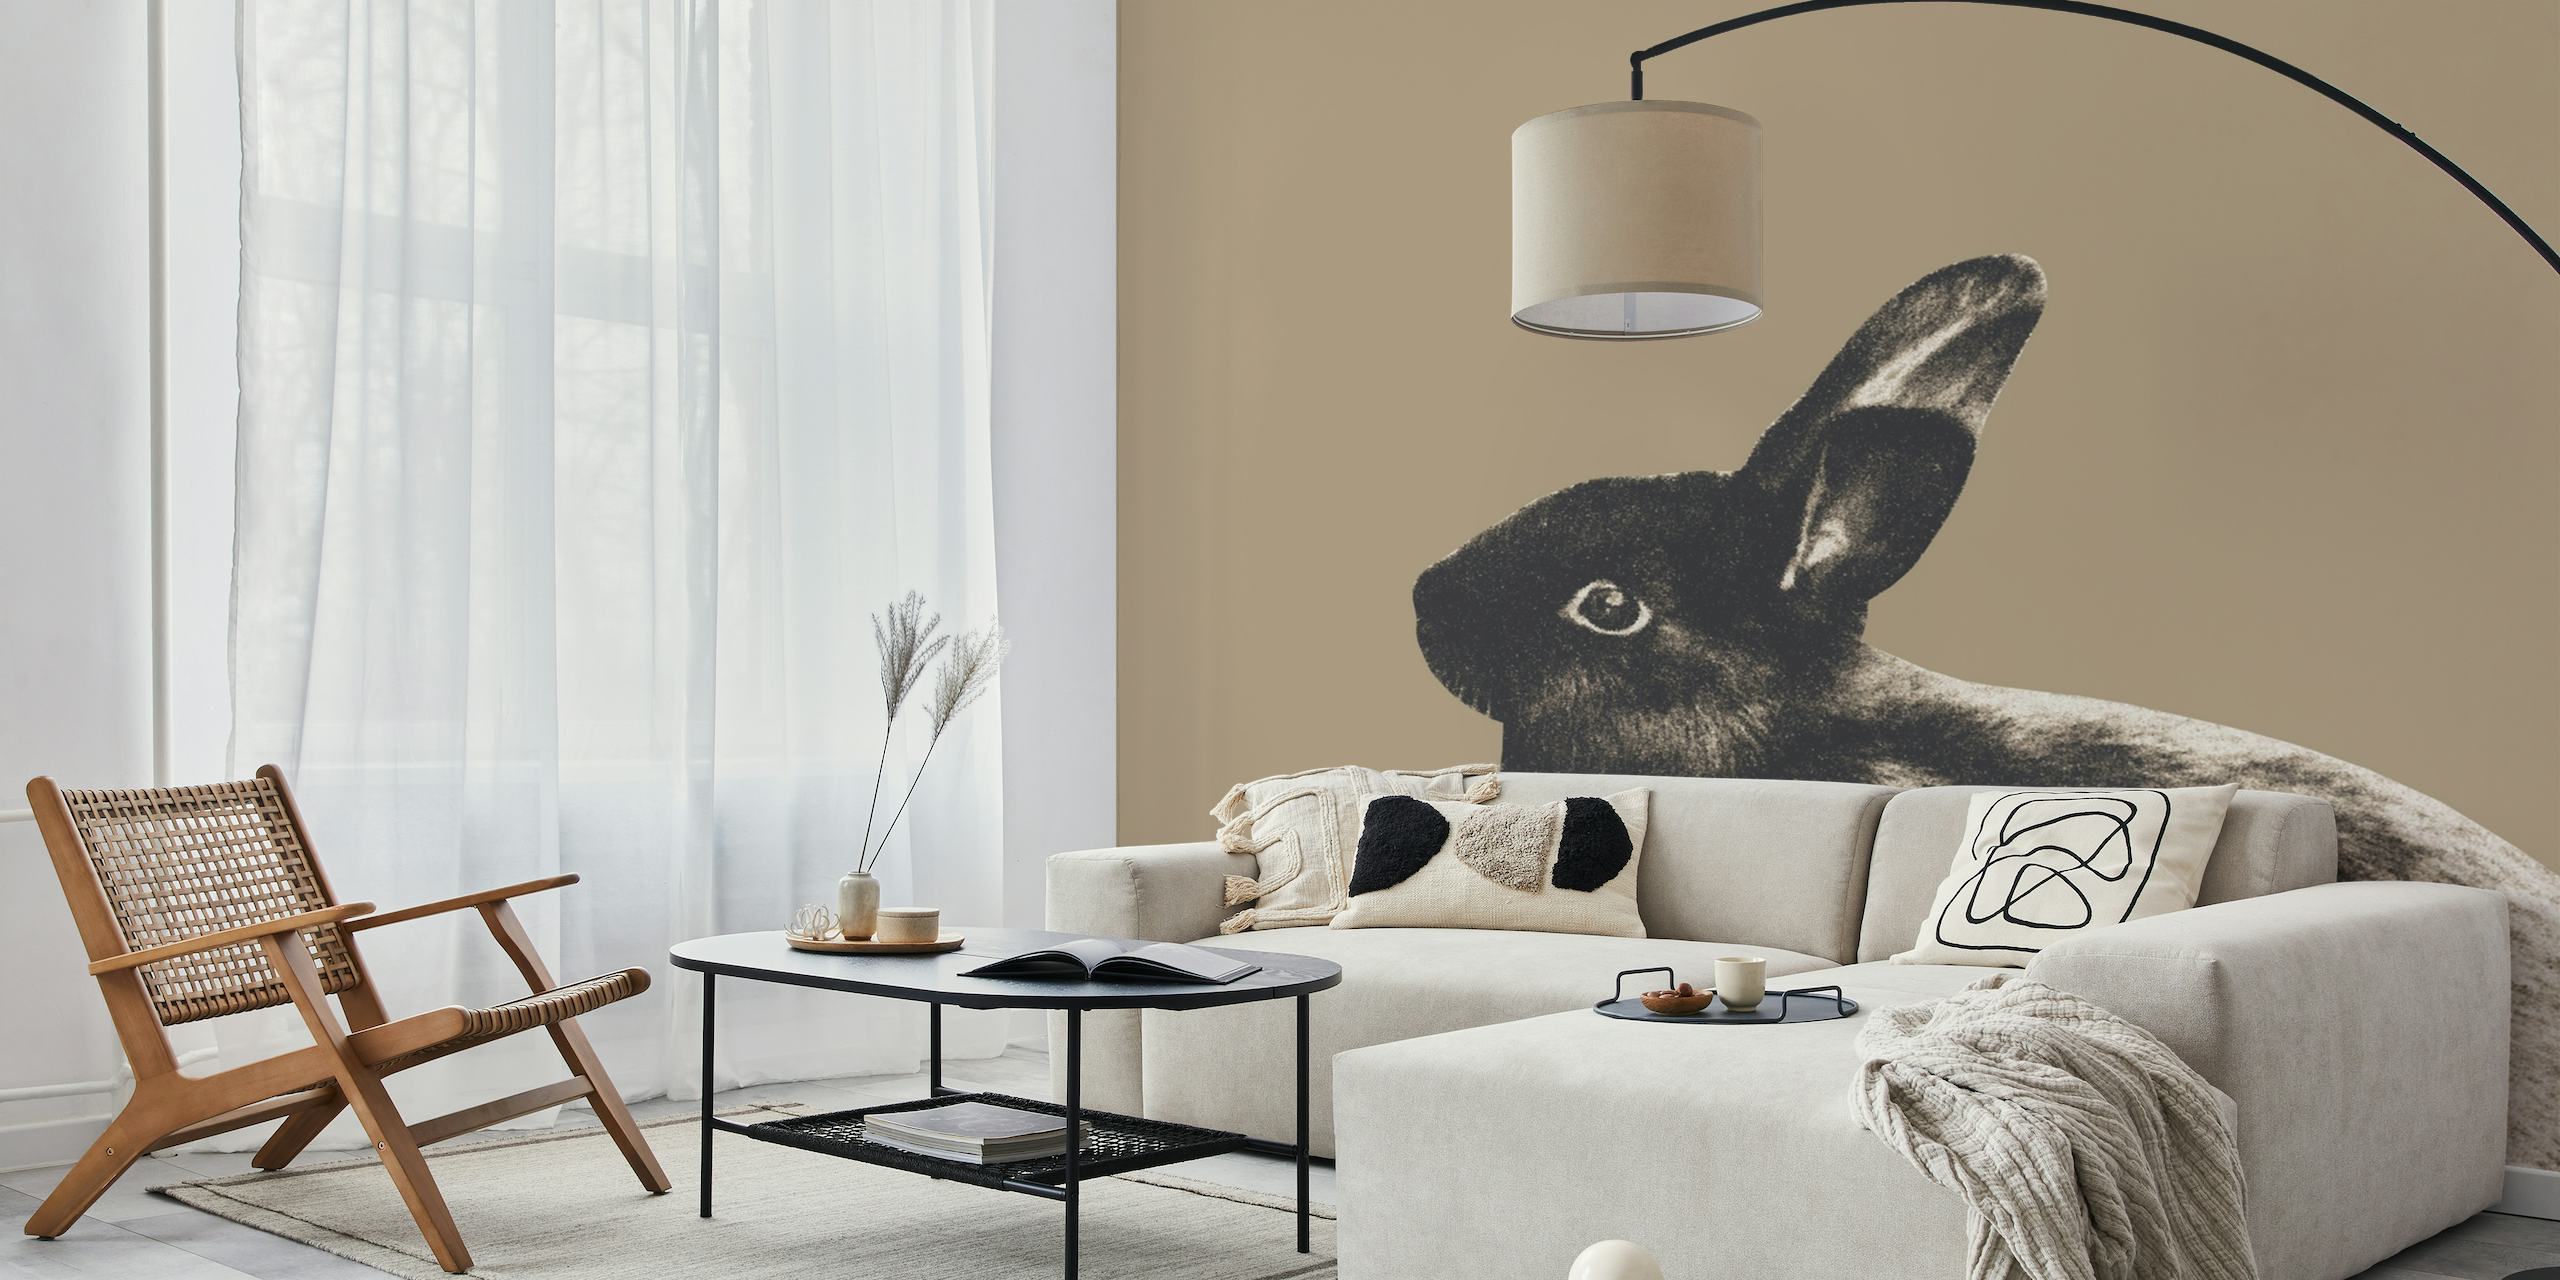 Little Rabbit on Sepia 1 wallpaper